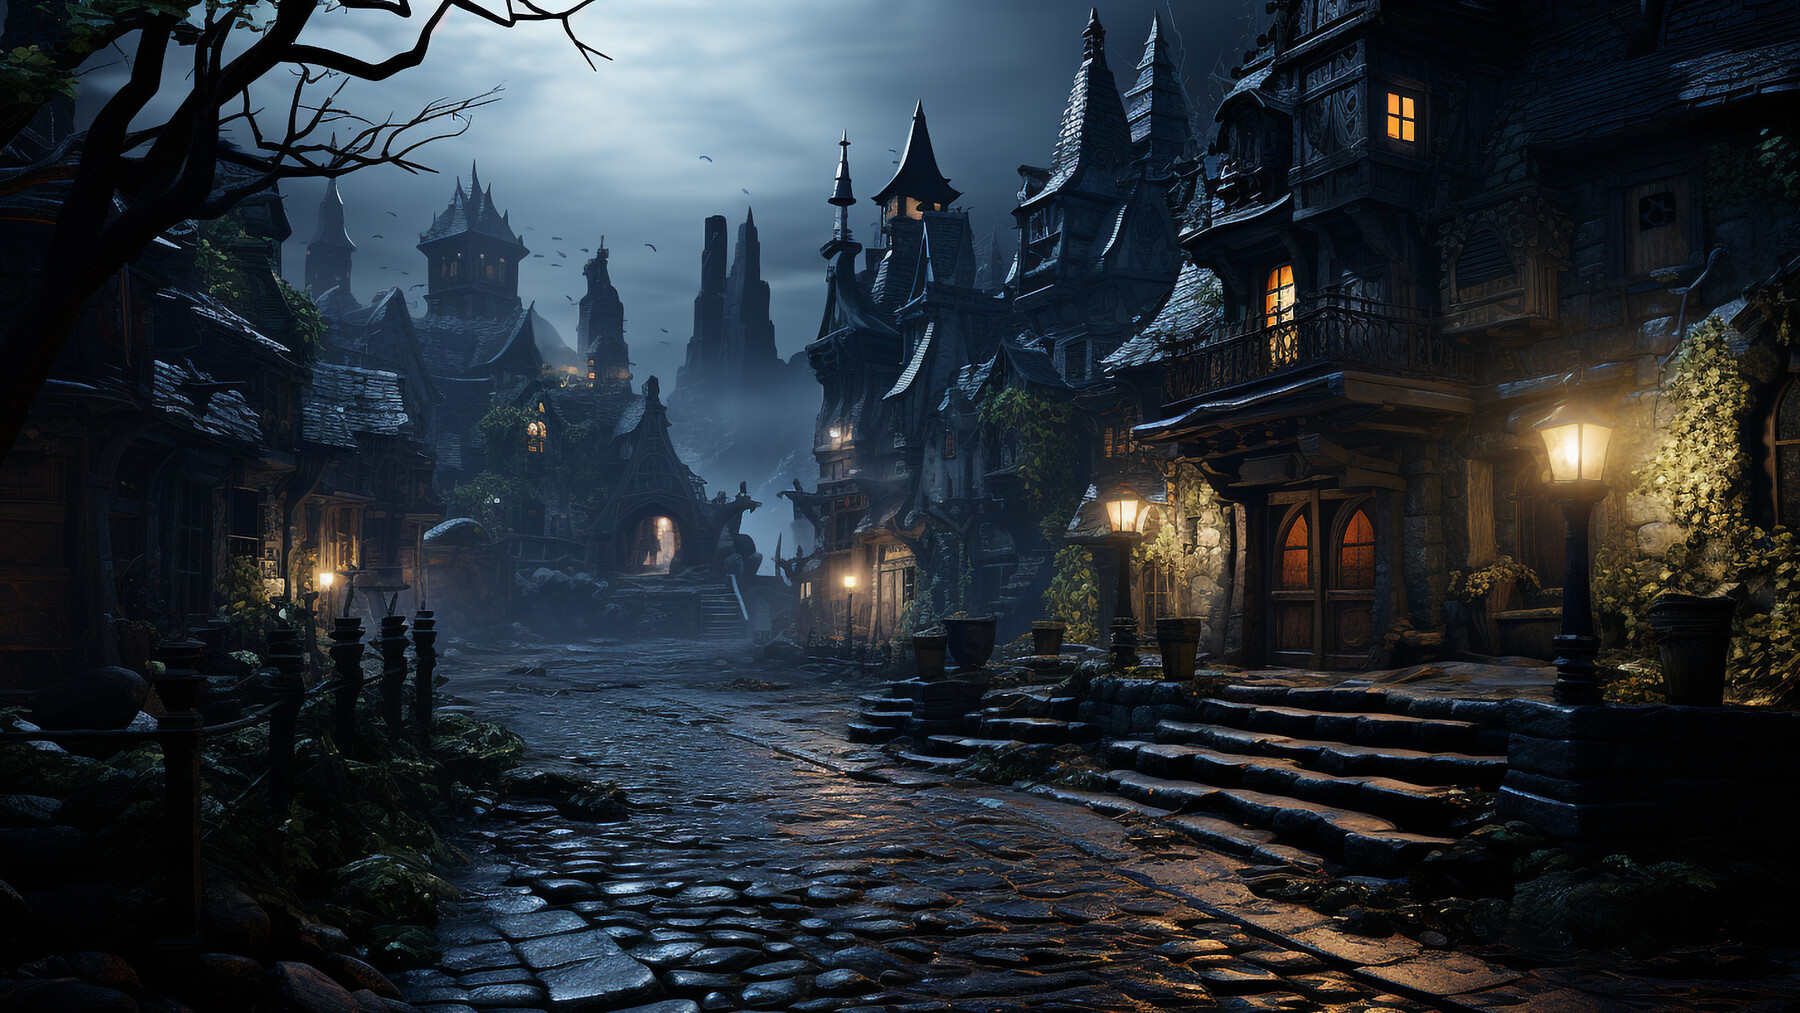 ArtStation - Gothic Dark Fantasy Town | Artworks